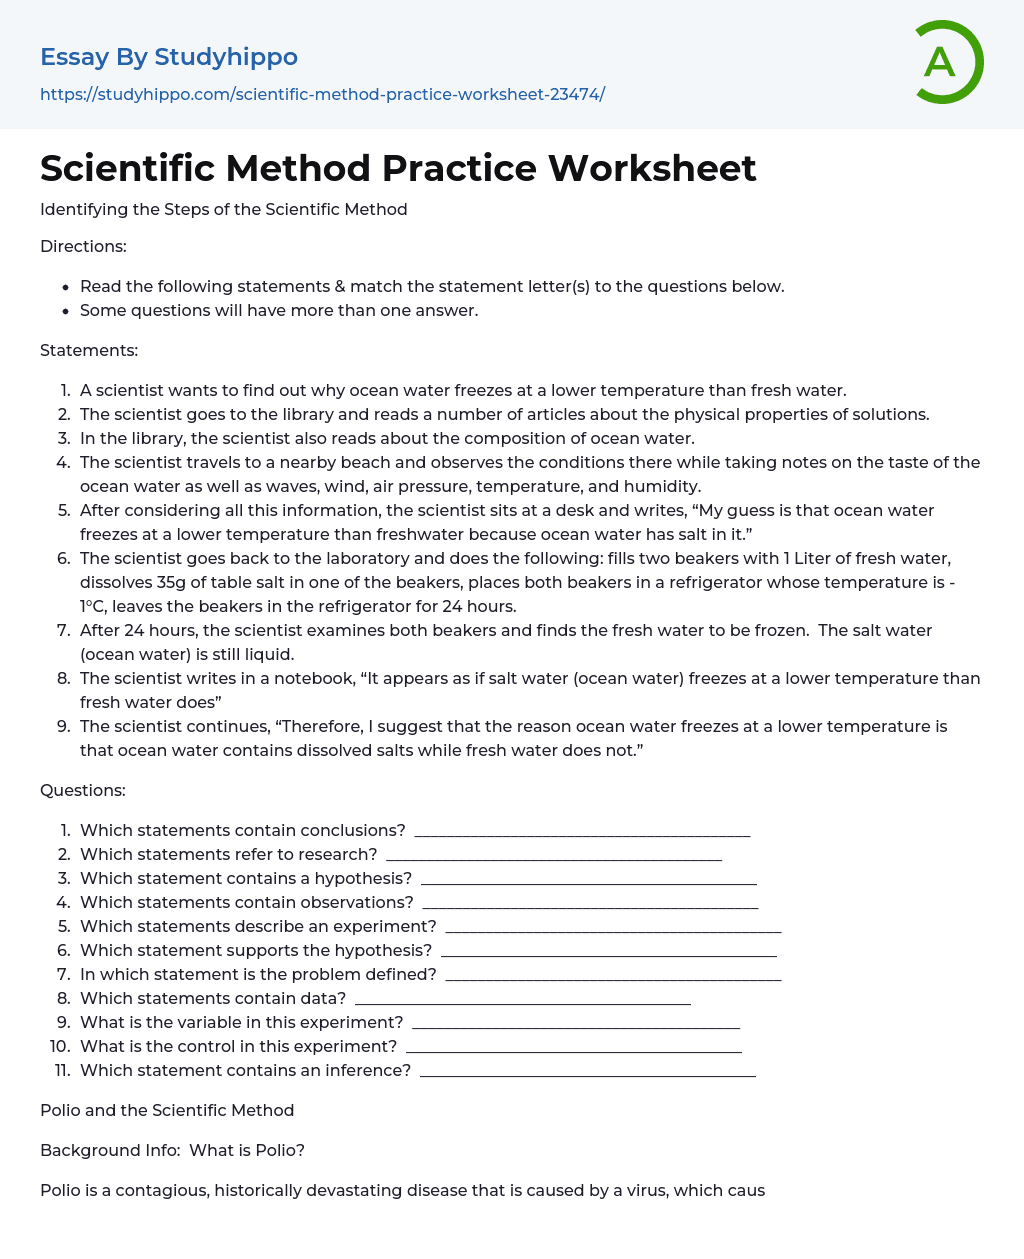 Scientific Method Practice Worksheet Essay Example